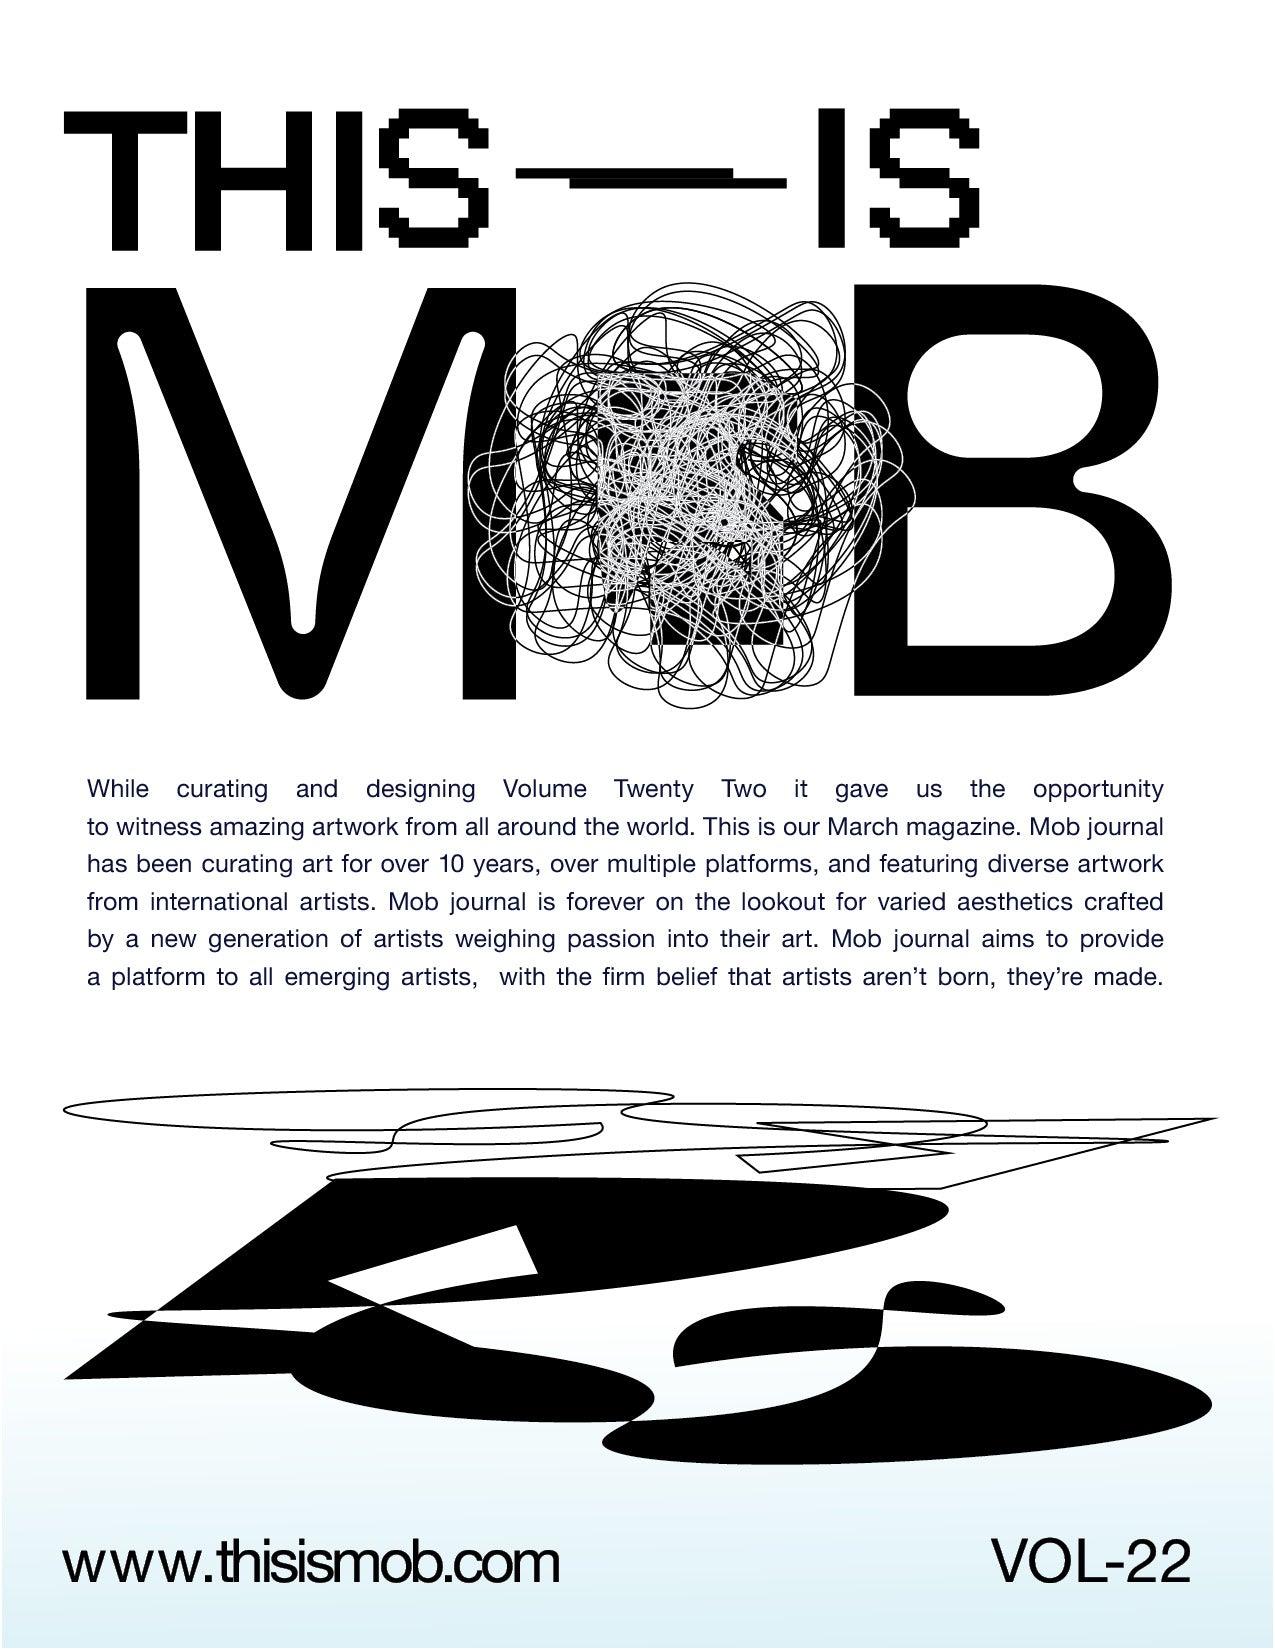 MOB JOURNAL | VOLUME TWENTY TWO | ISSUE #07 - Mob Journal